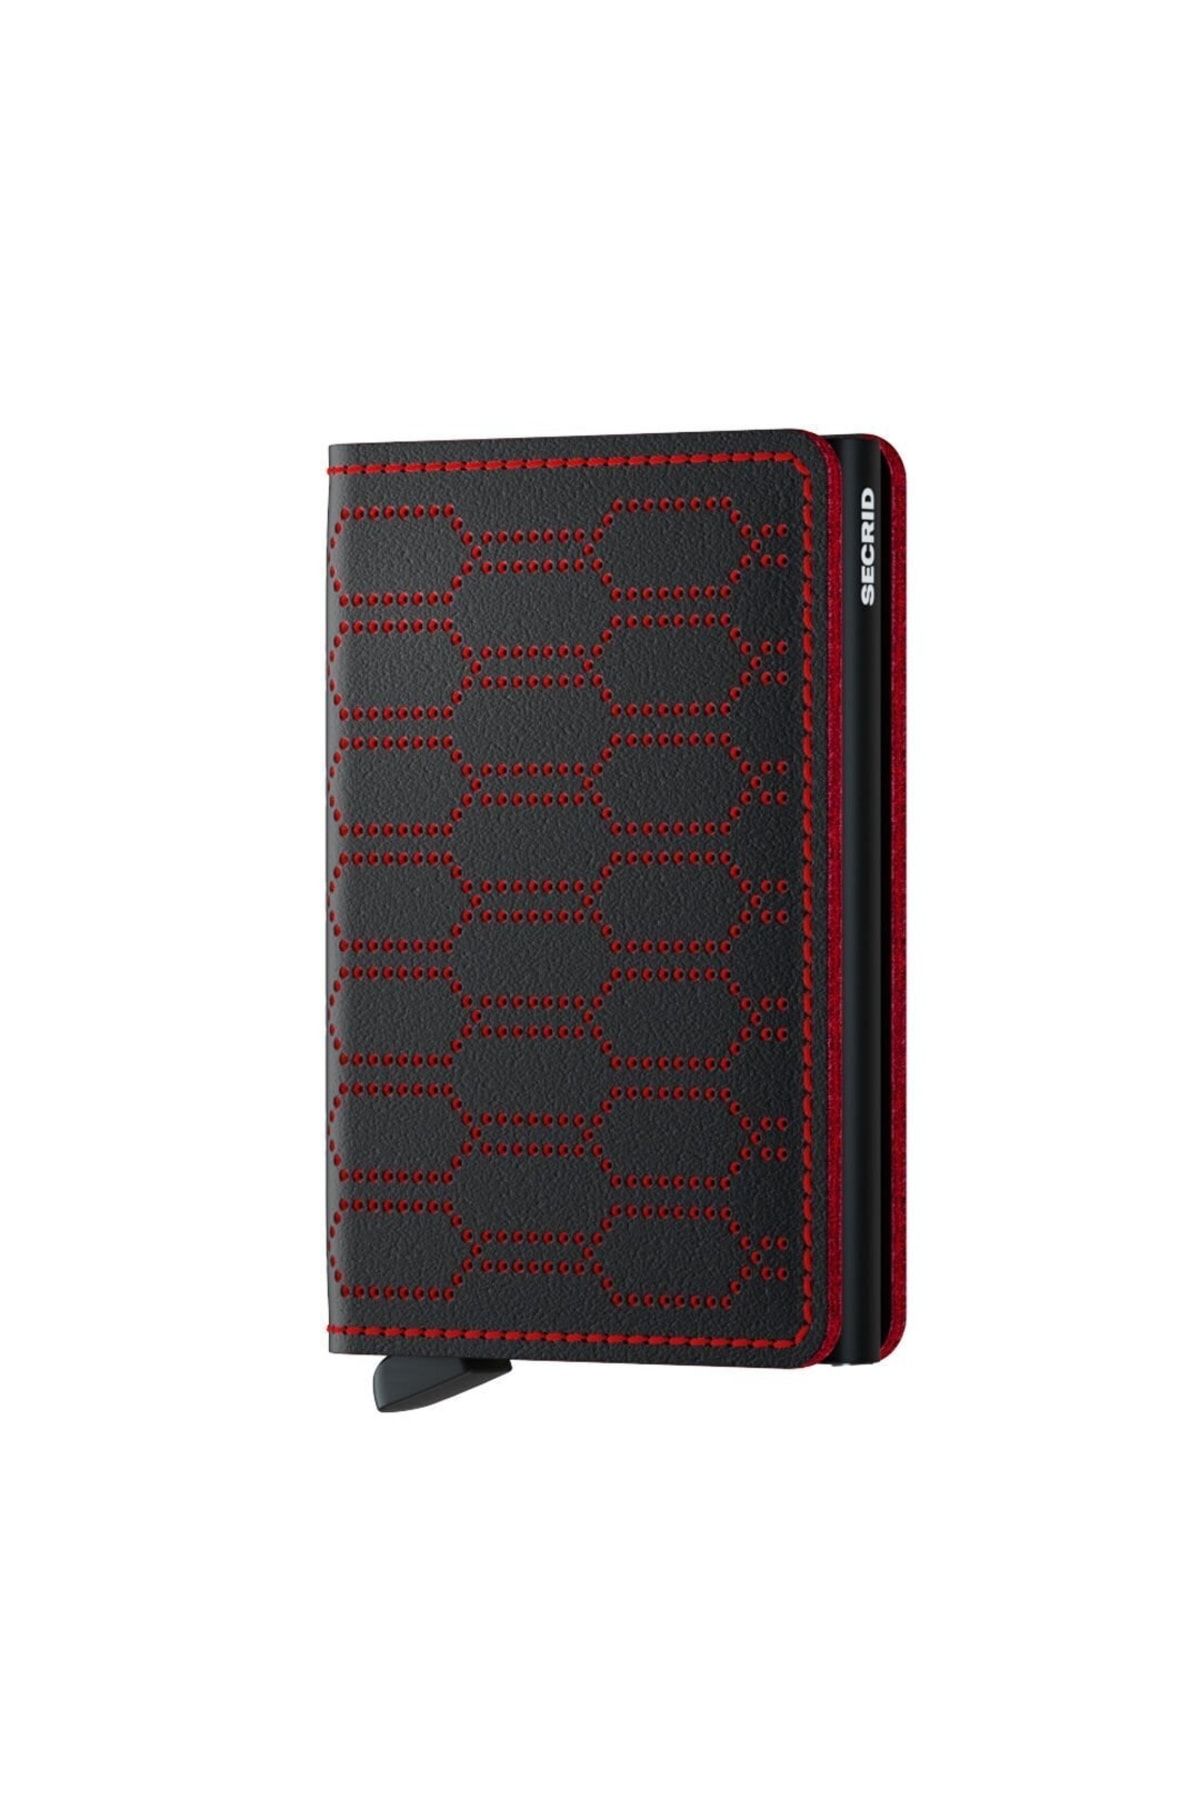 Secrid Slim wallet Fuel Black-Red